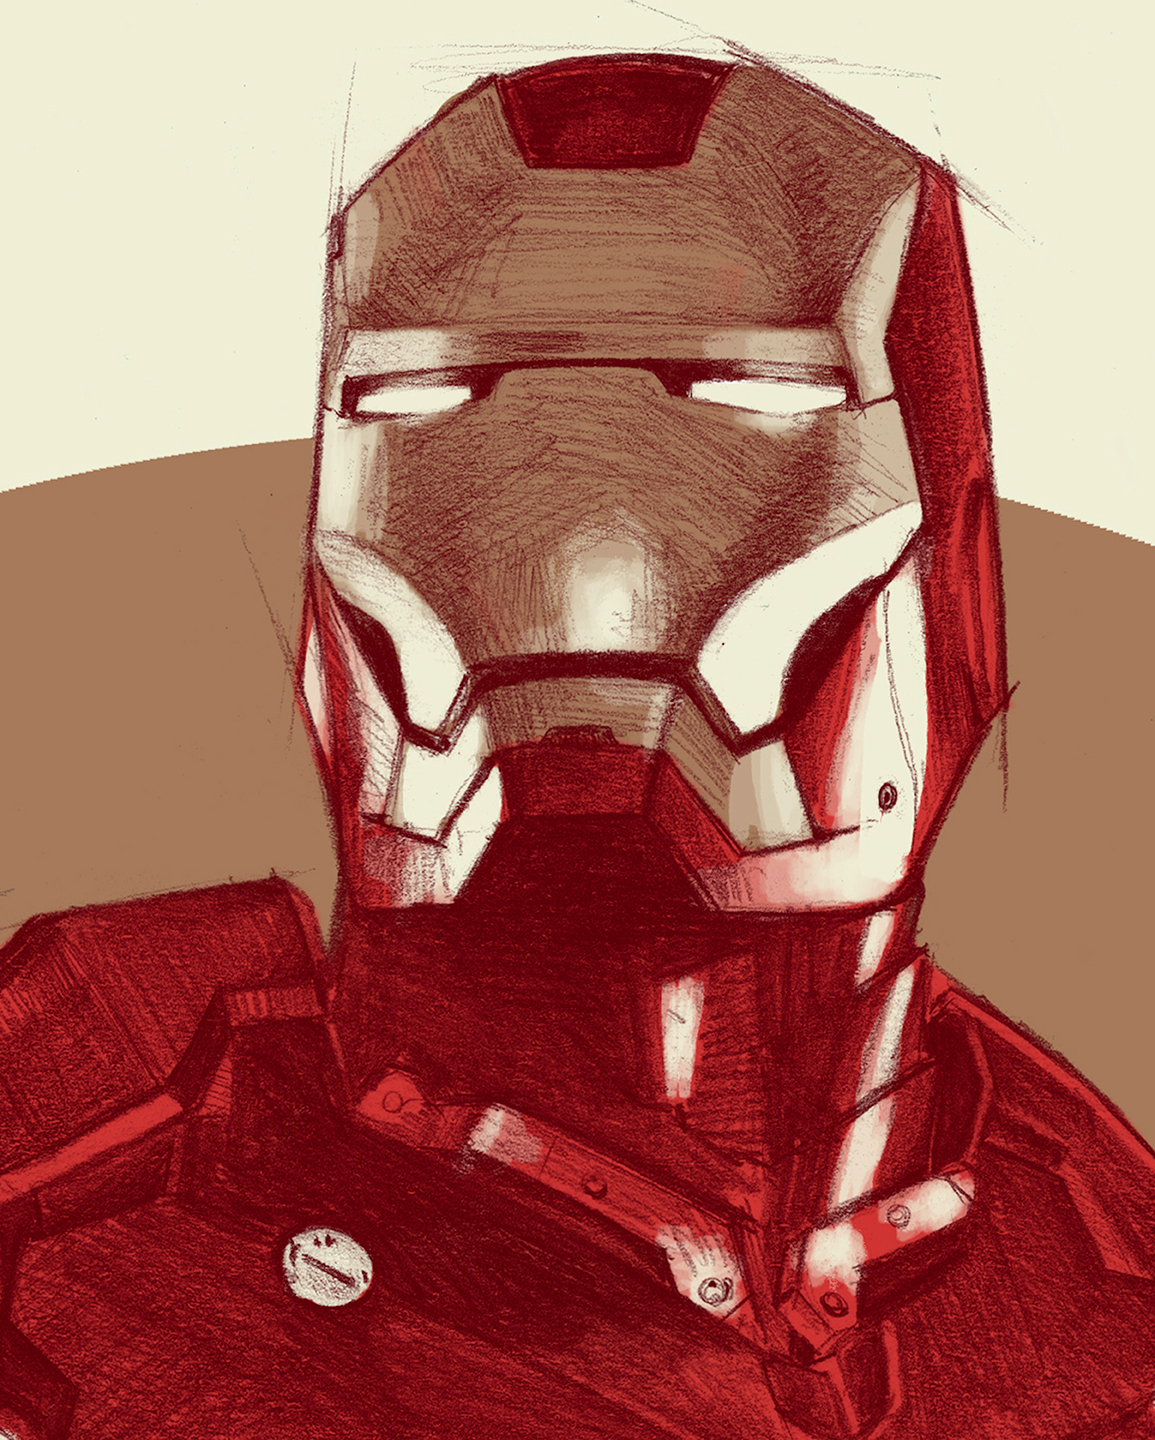 Iron Man Movie 10th anniversary Tony Stark Mark Illustration Poster Illustrated Marvel Studios Cinematic graphite pencil portrait